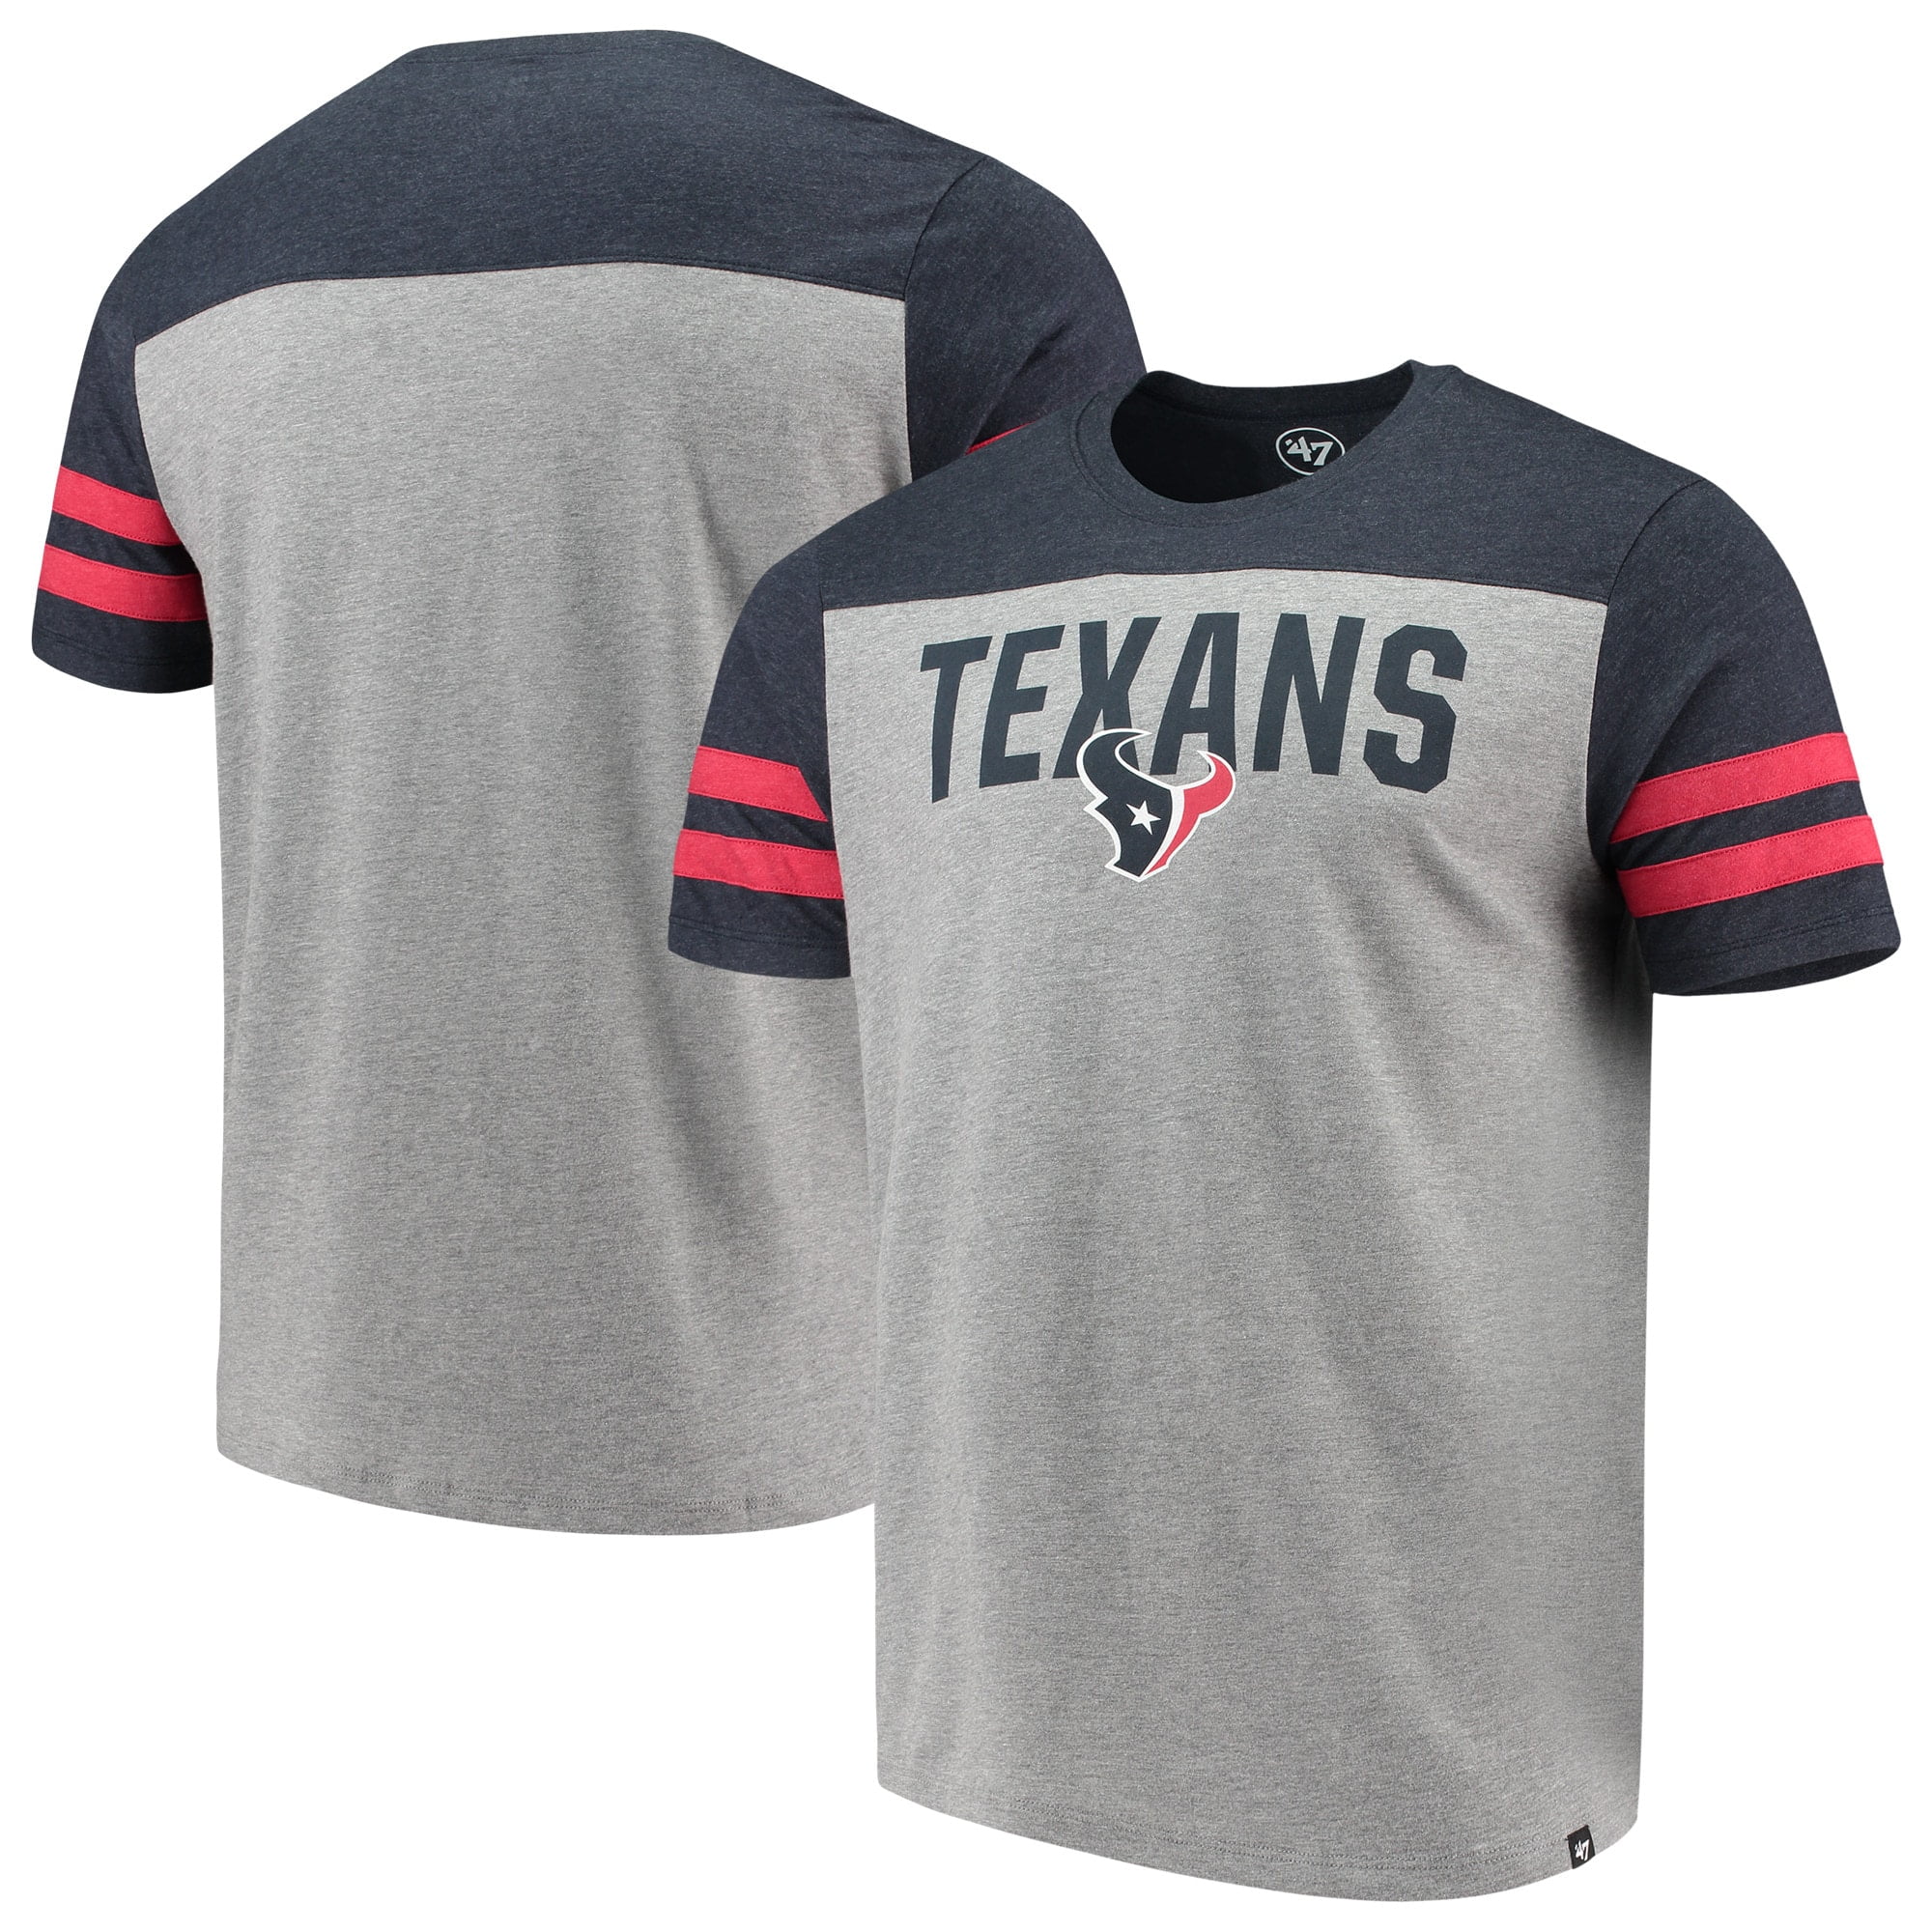 Houston Texans '47 Versus Club T-Shirt 